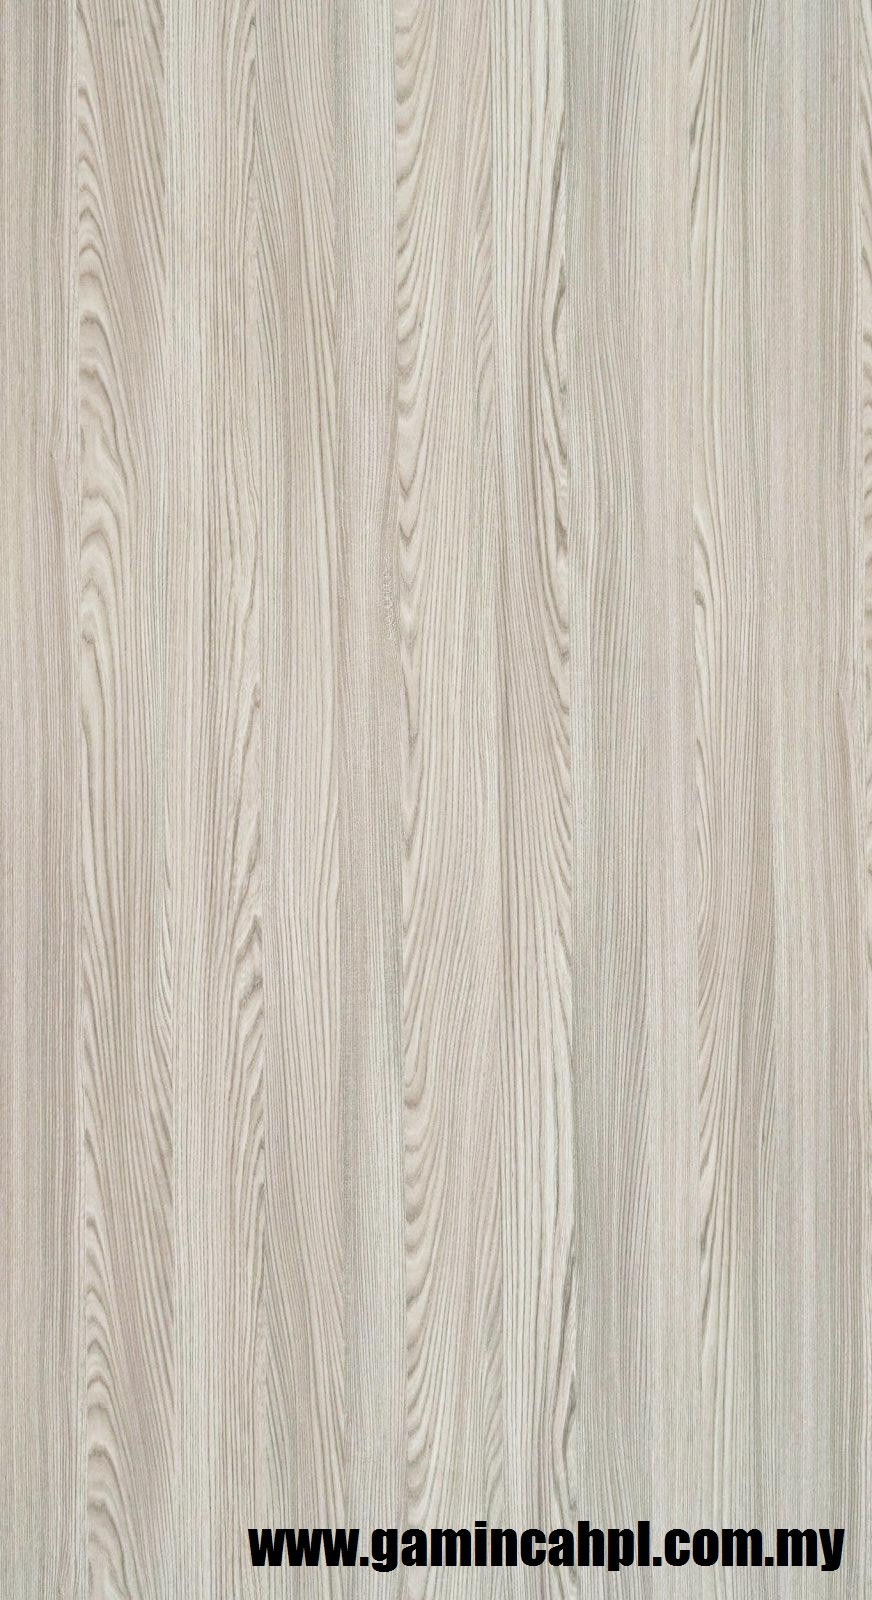 GM11-8011 KALM ELM Authentic Wood Series Laminate Flooring Choose Sample / Pattern Chart